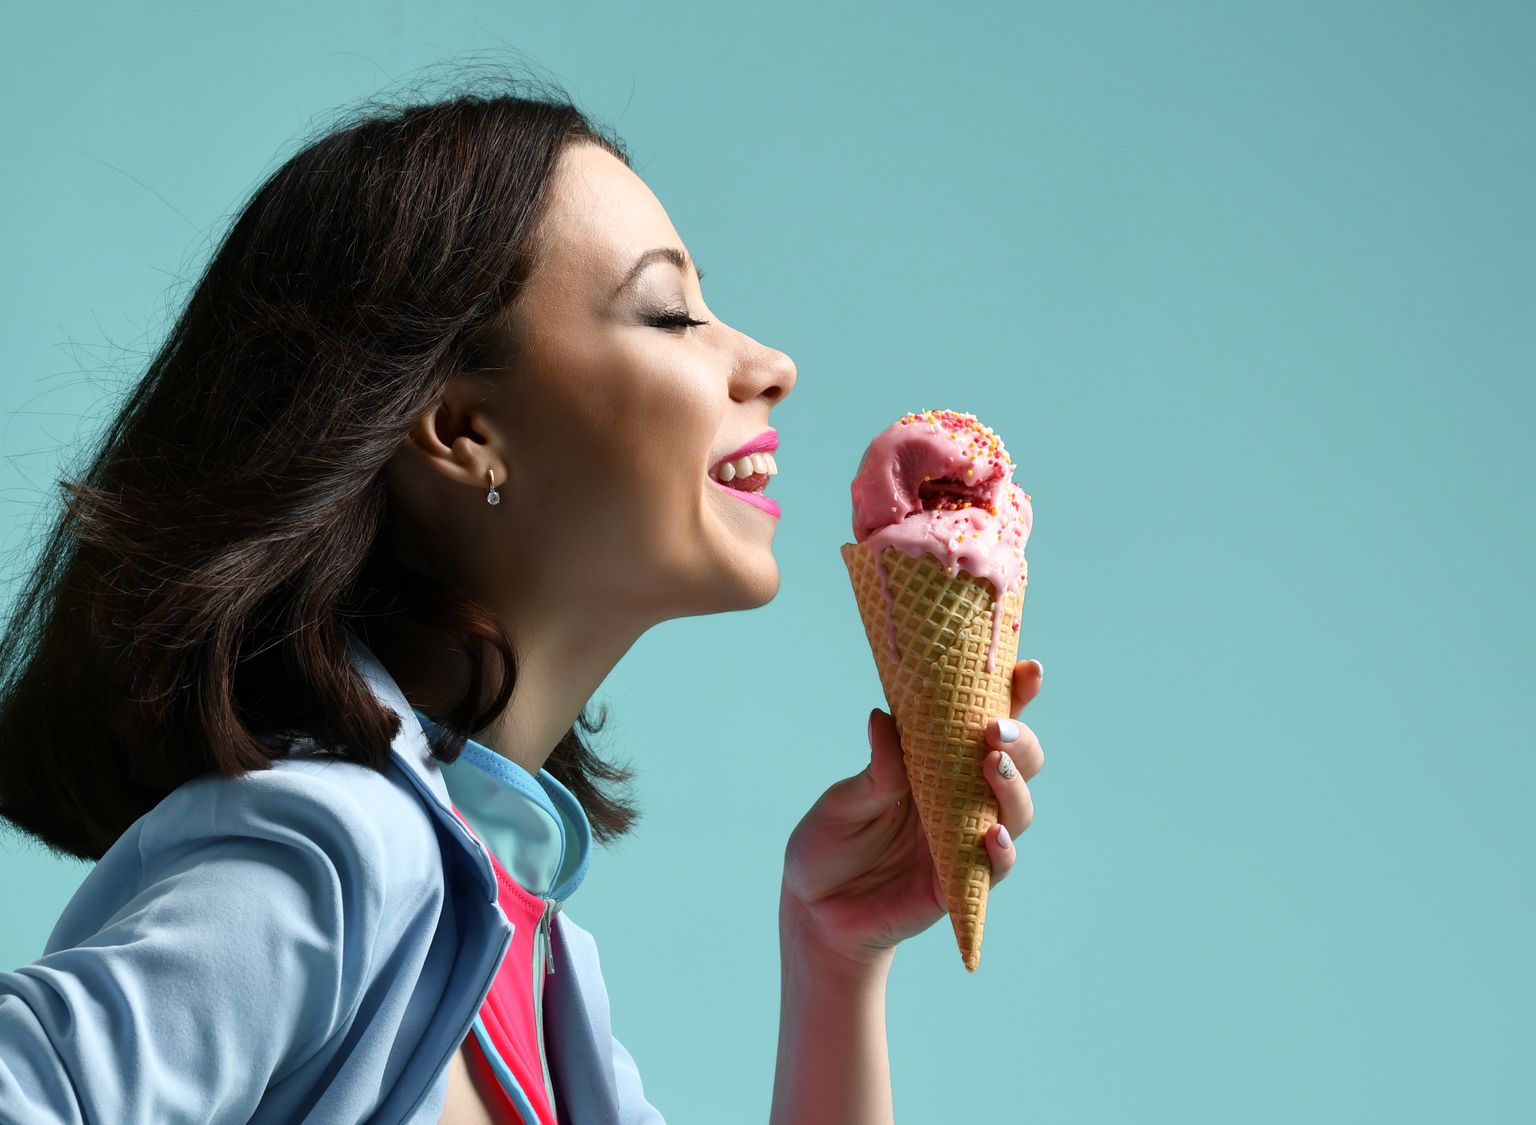 Девушка ест мороженое. Иллюстративное фото